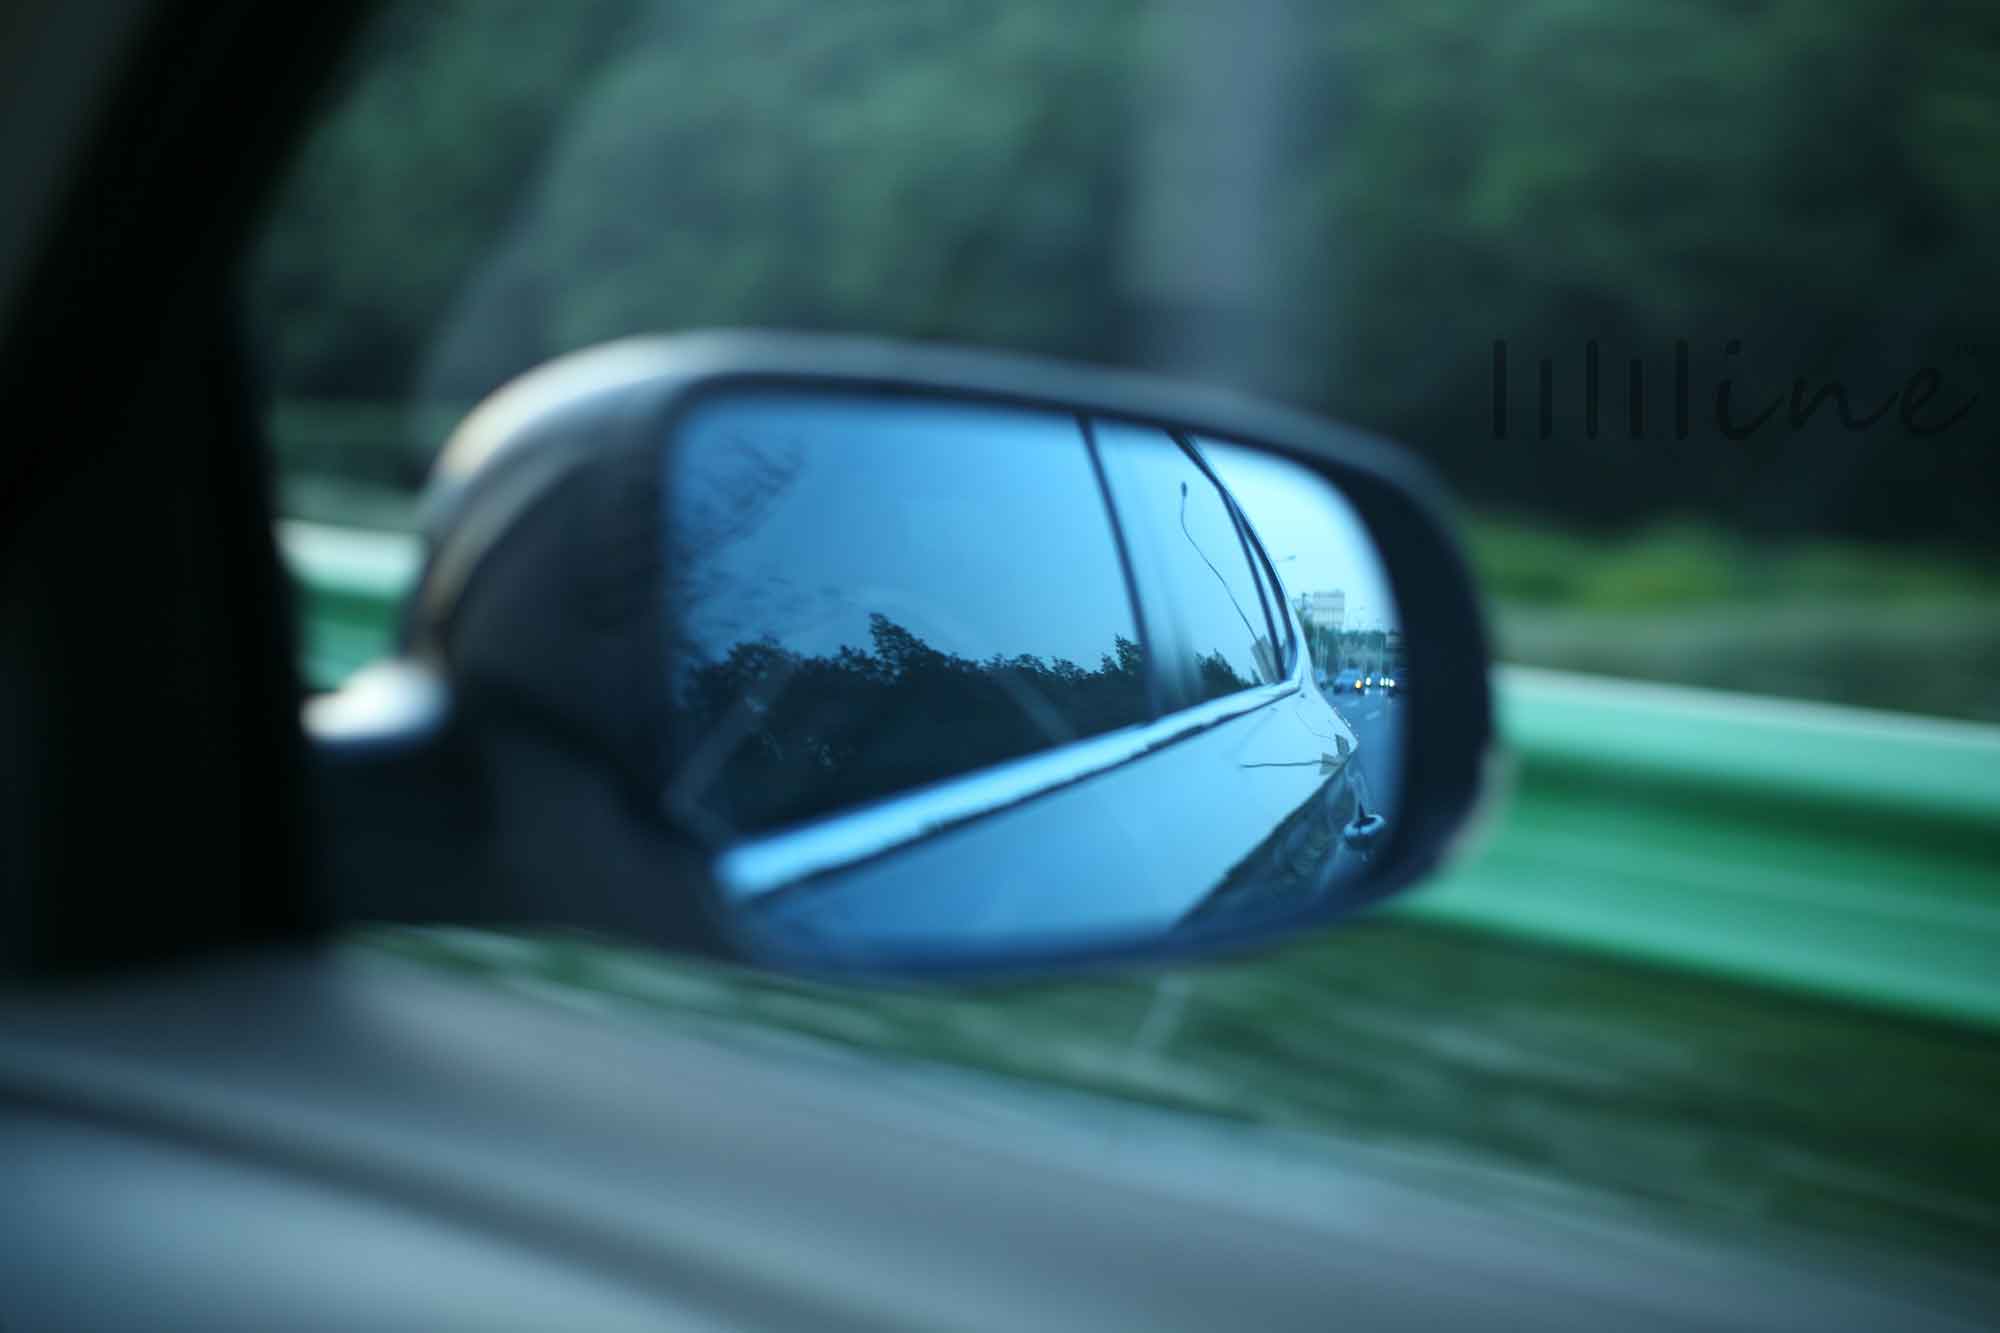 Automobile rearview mirror photographs